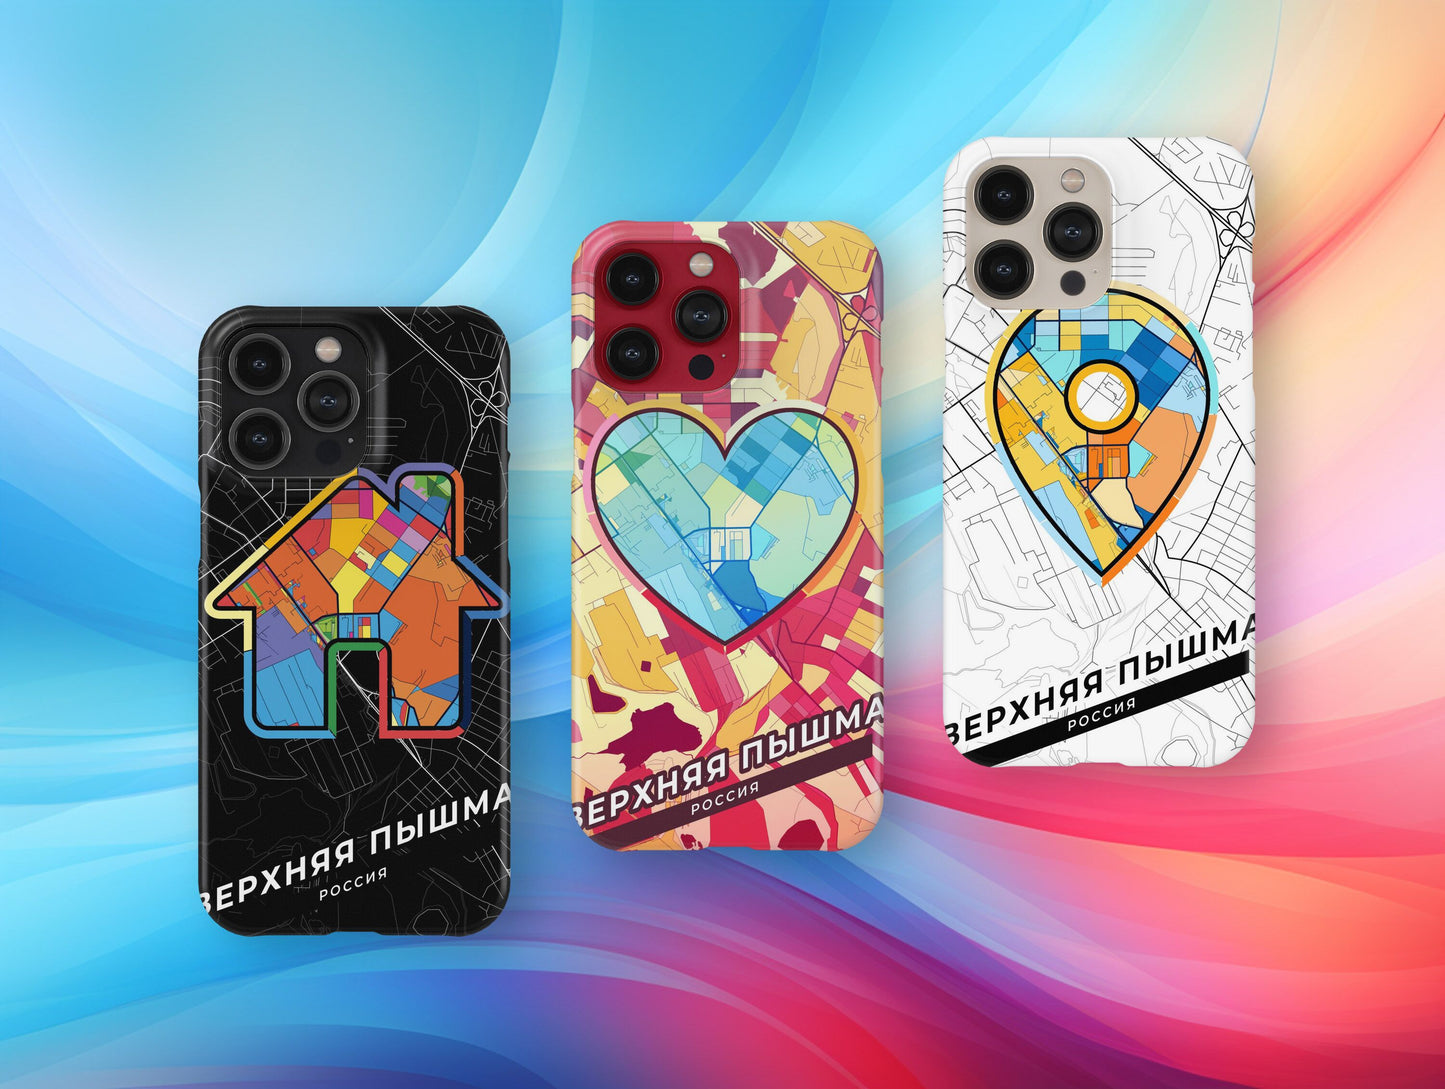 Verkhnyaya Pyshma Russia slim phone case with colorful icon